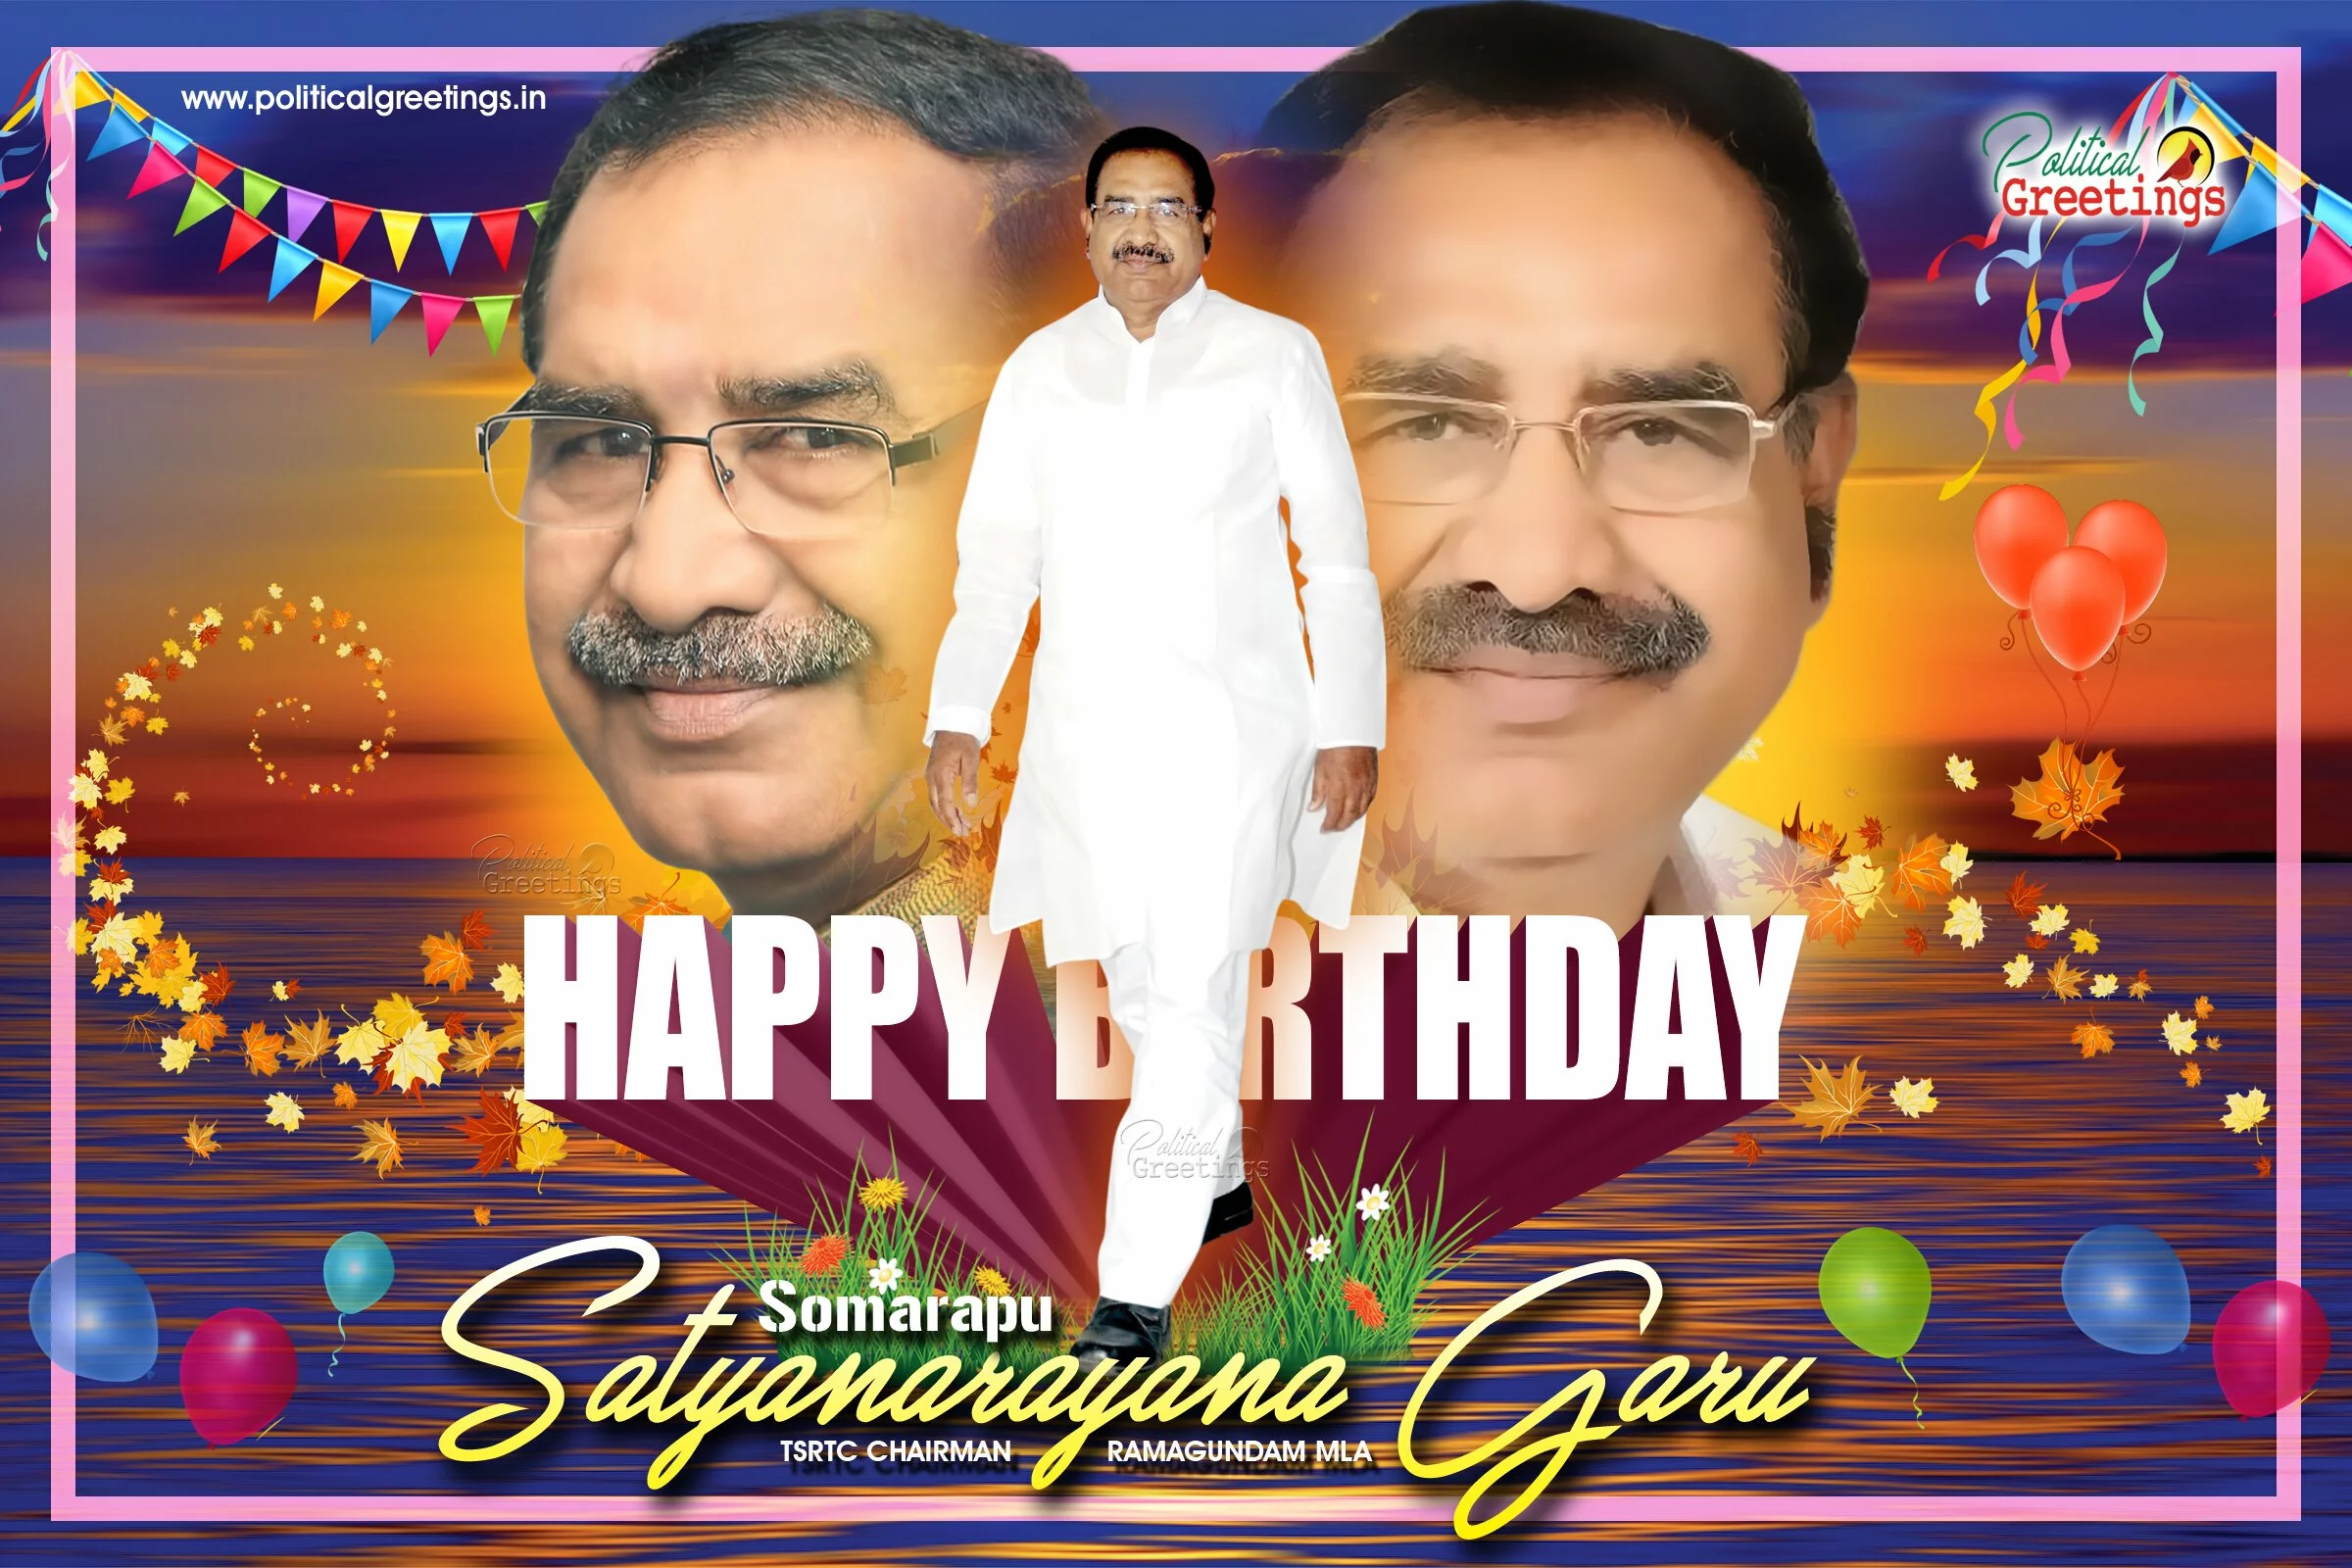 tsrtc-chairman-somarapu-satyanarayana-birthday-wishes-poster-quotes-wallpapers1